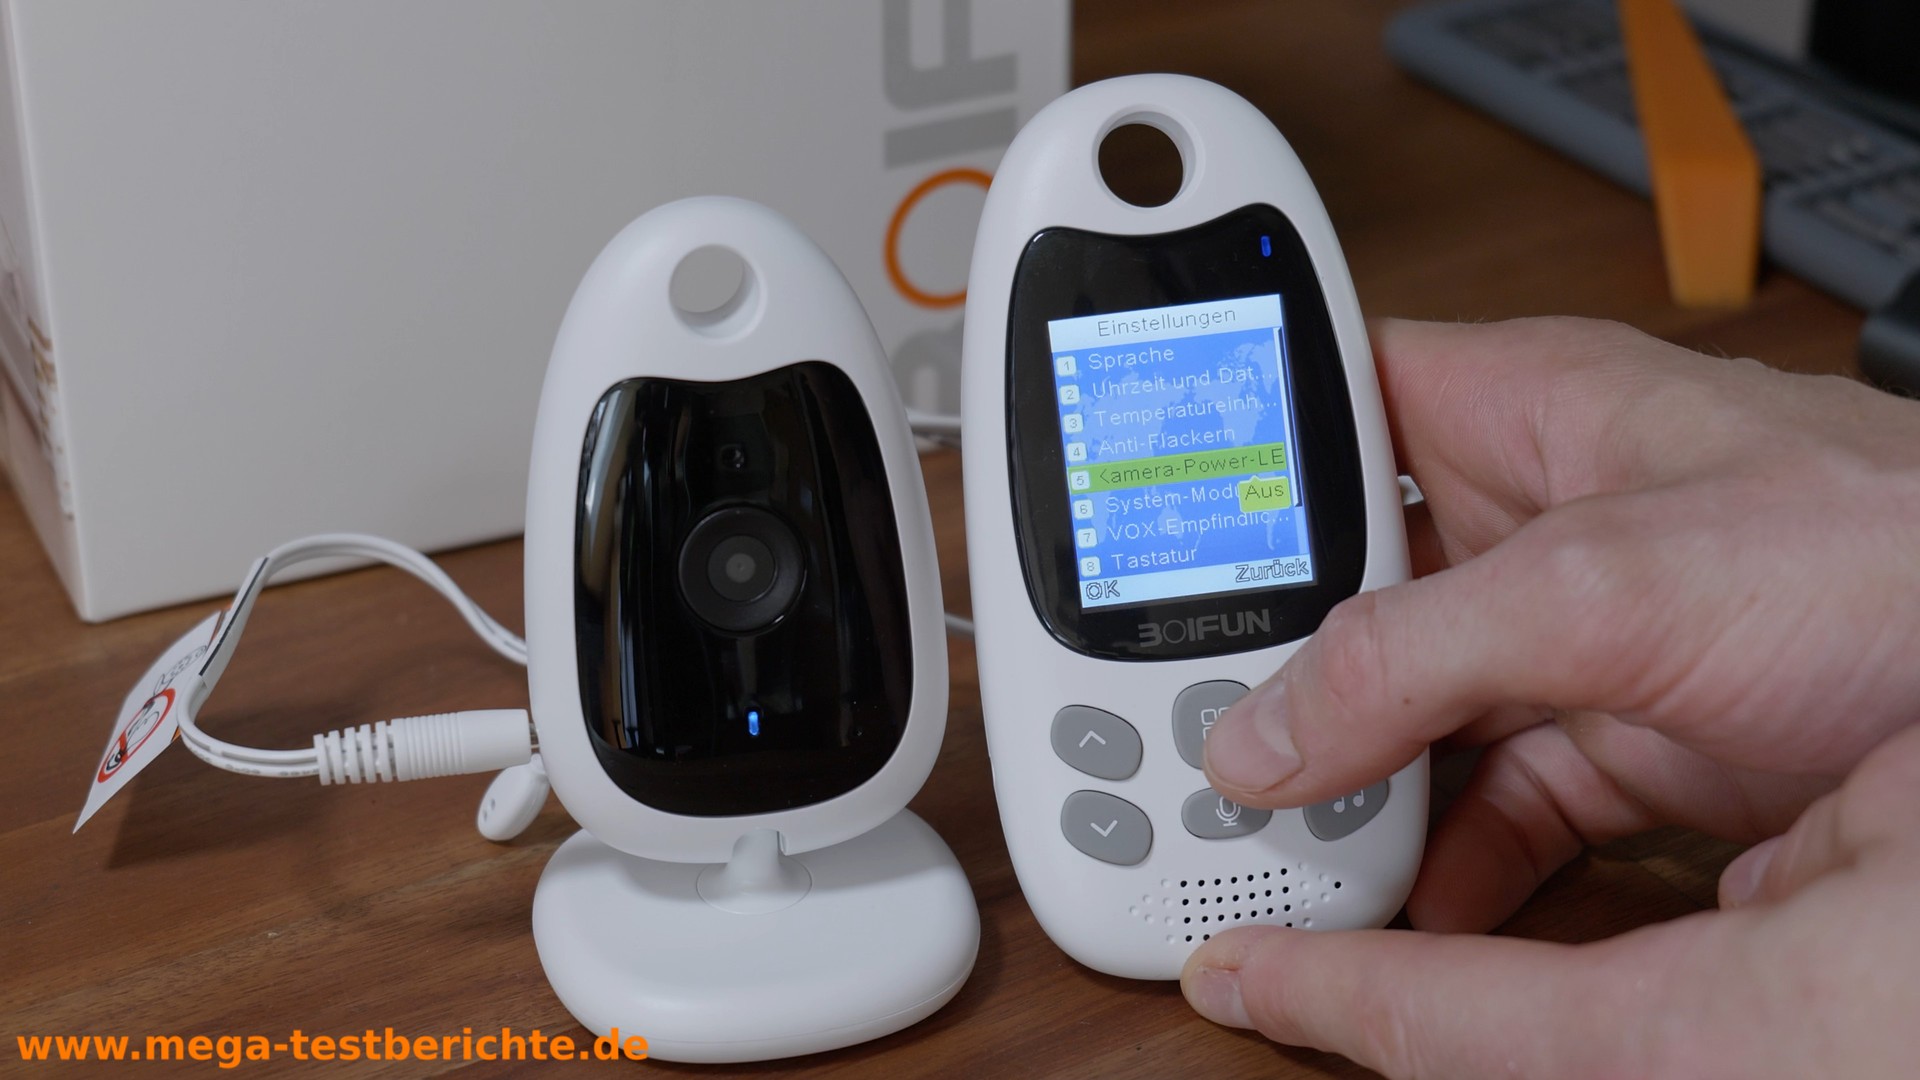 Babyphone mit Kamera - Boifun VB610 Test